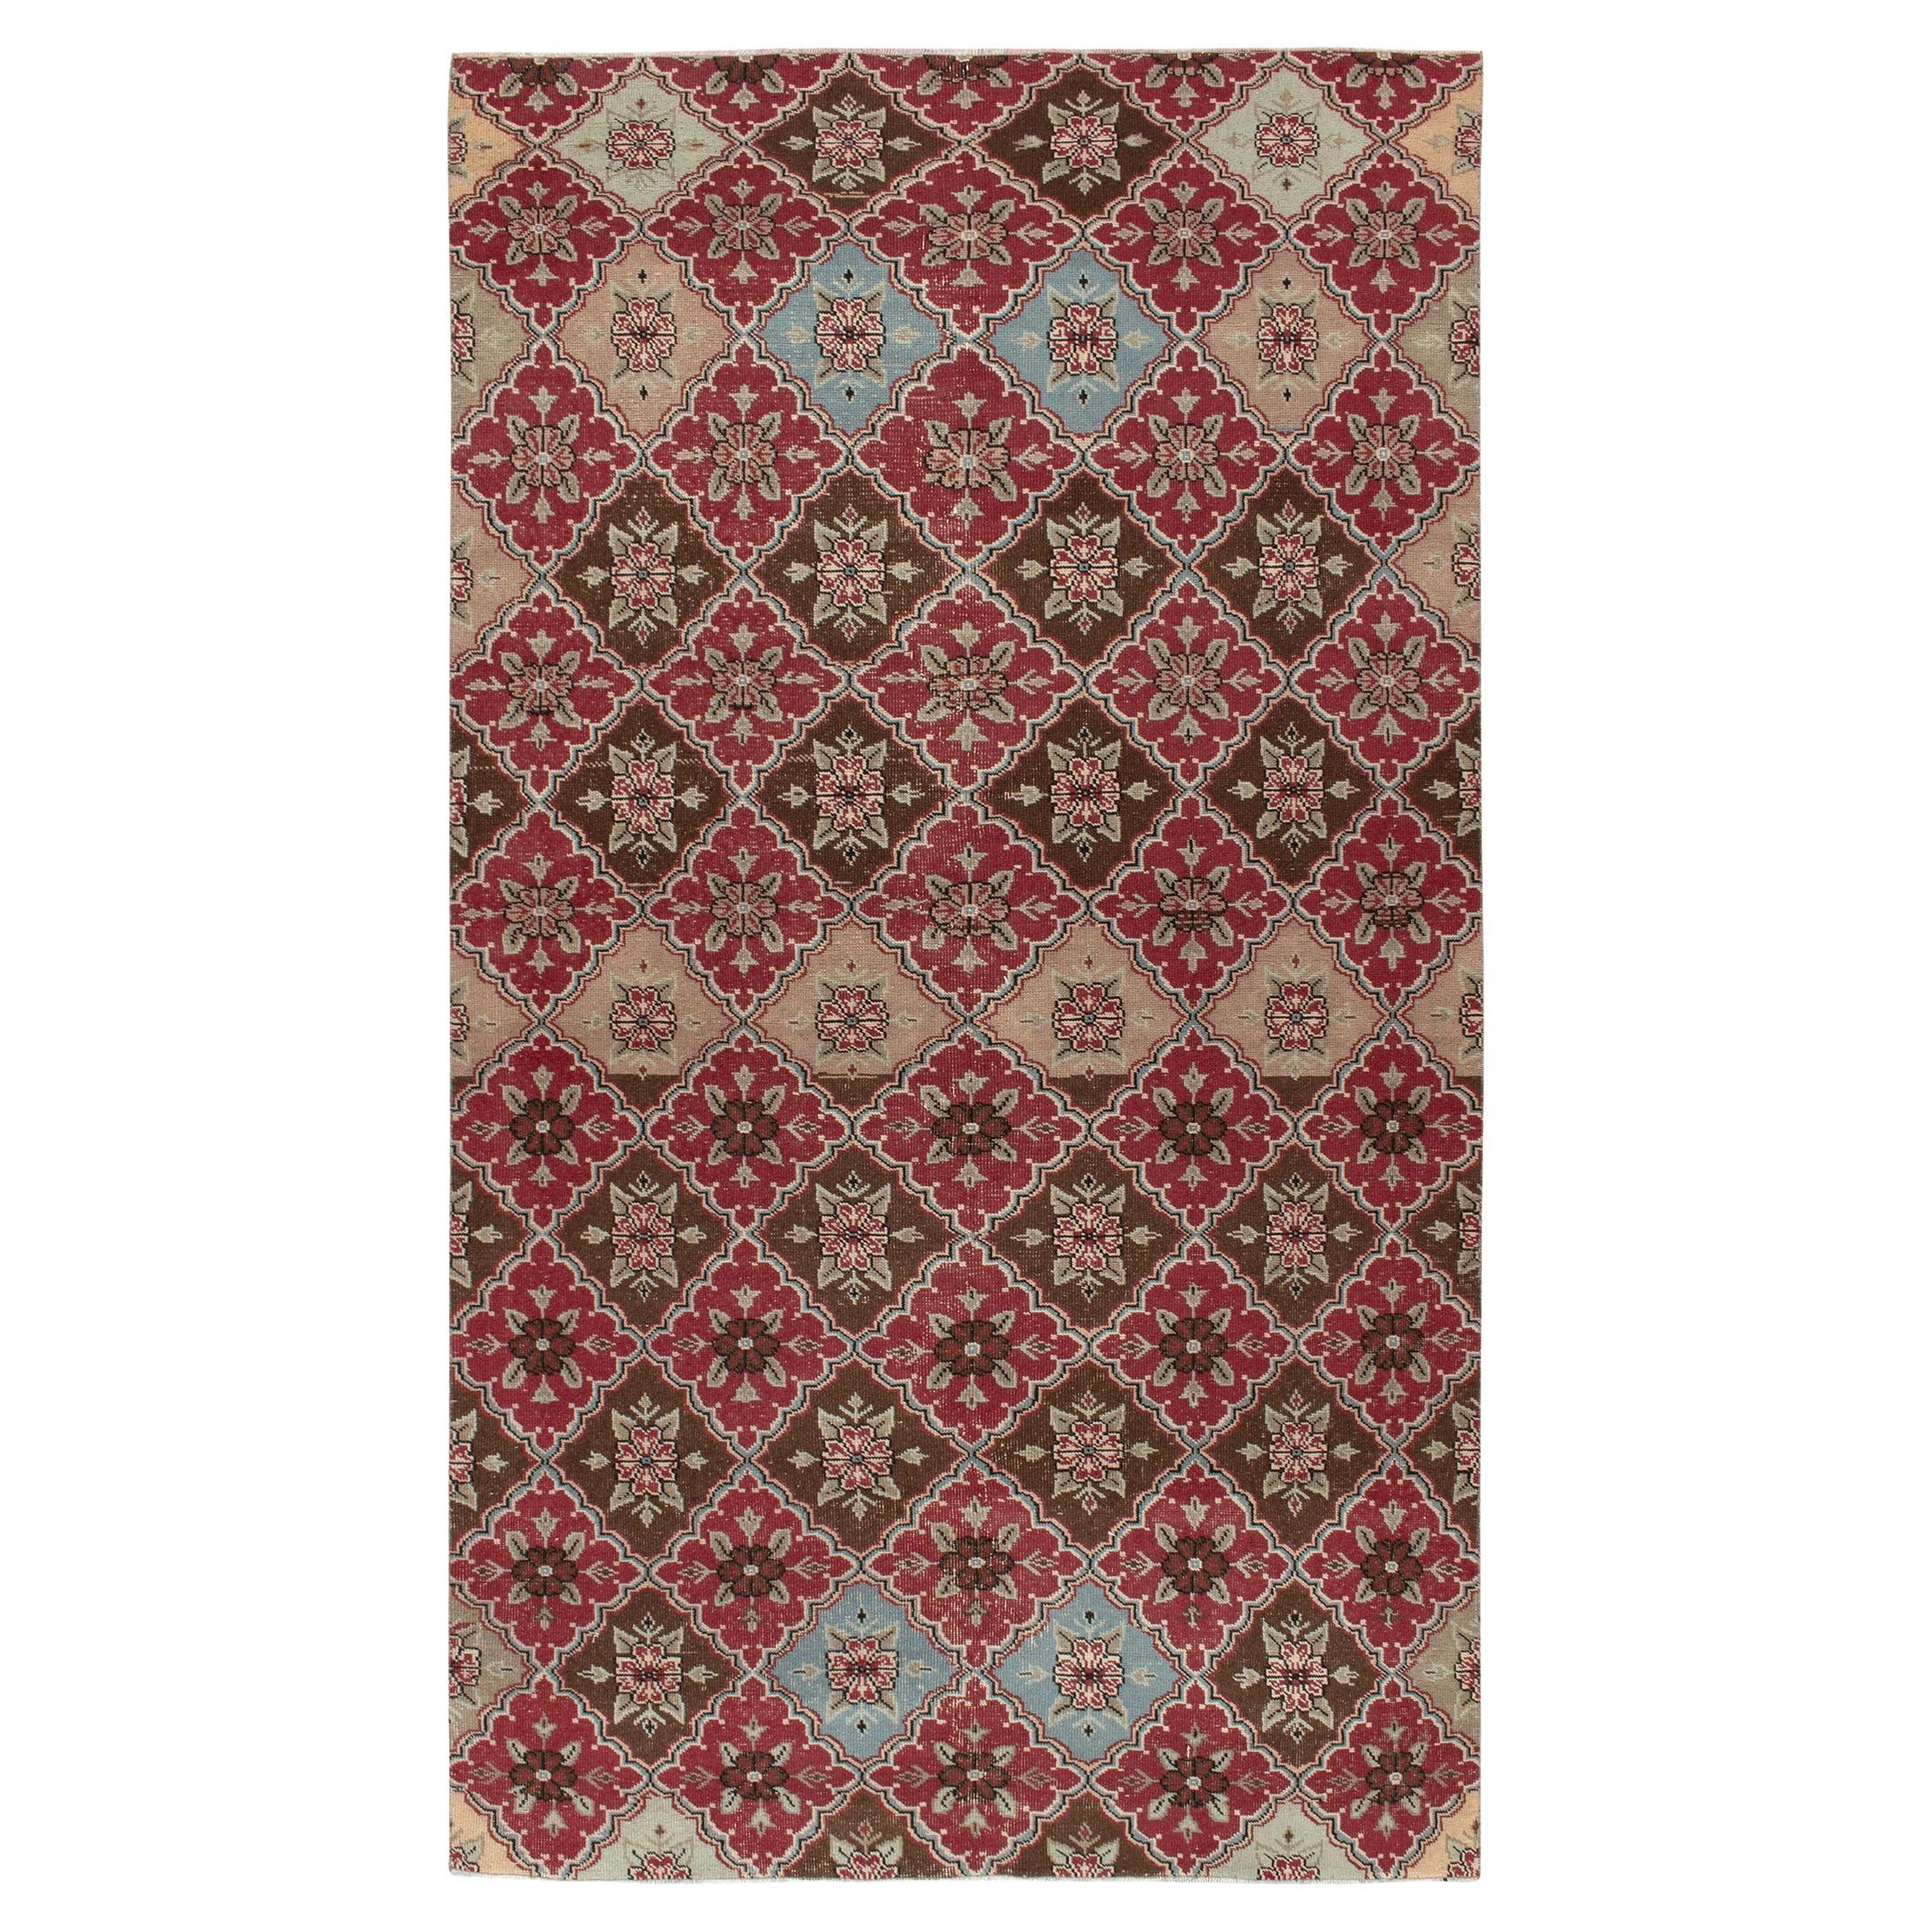 1960s Vintage Deco Rug in Red, Beige-Brown Floral Trellis Pattern by Rug & Kilim For Sale